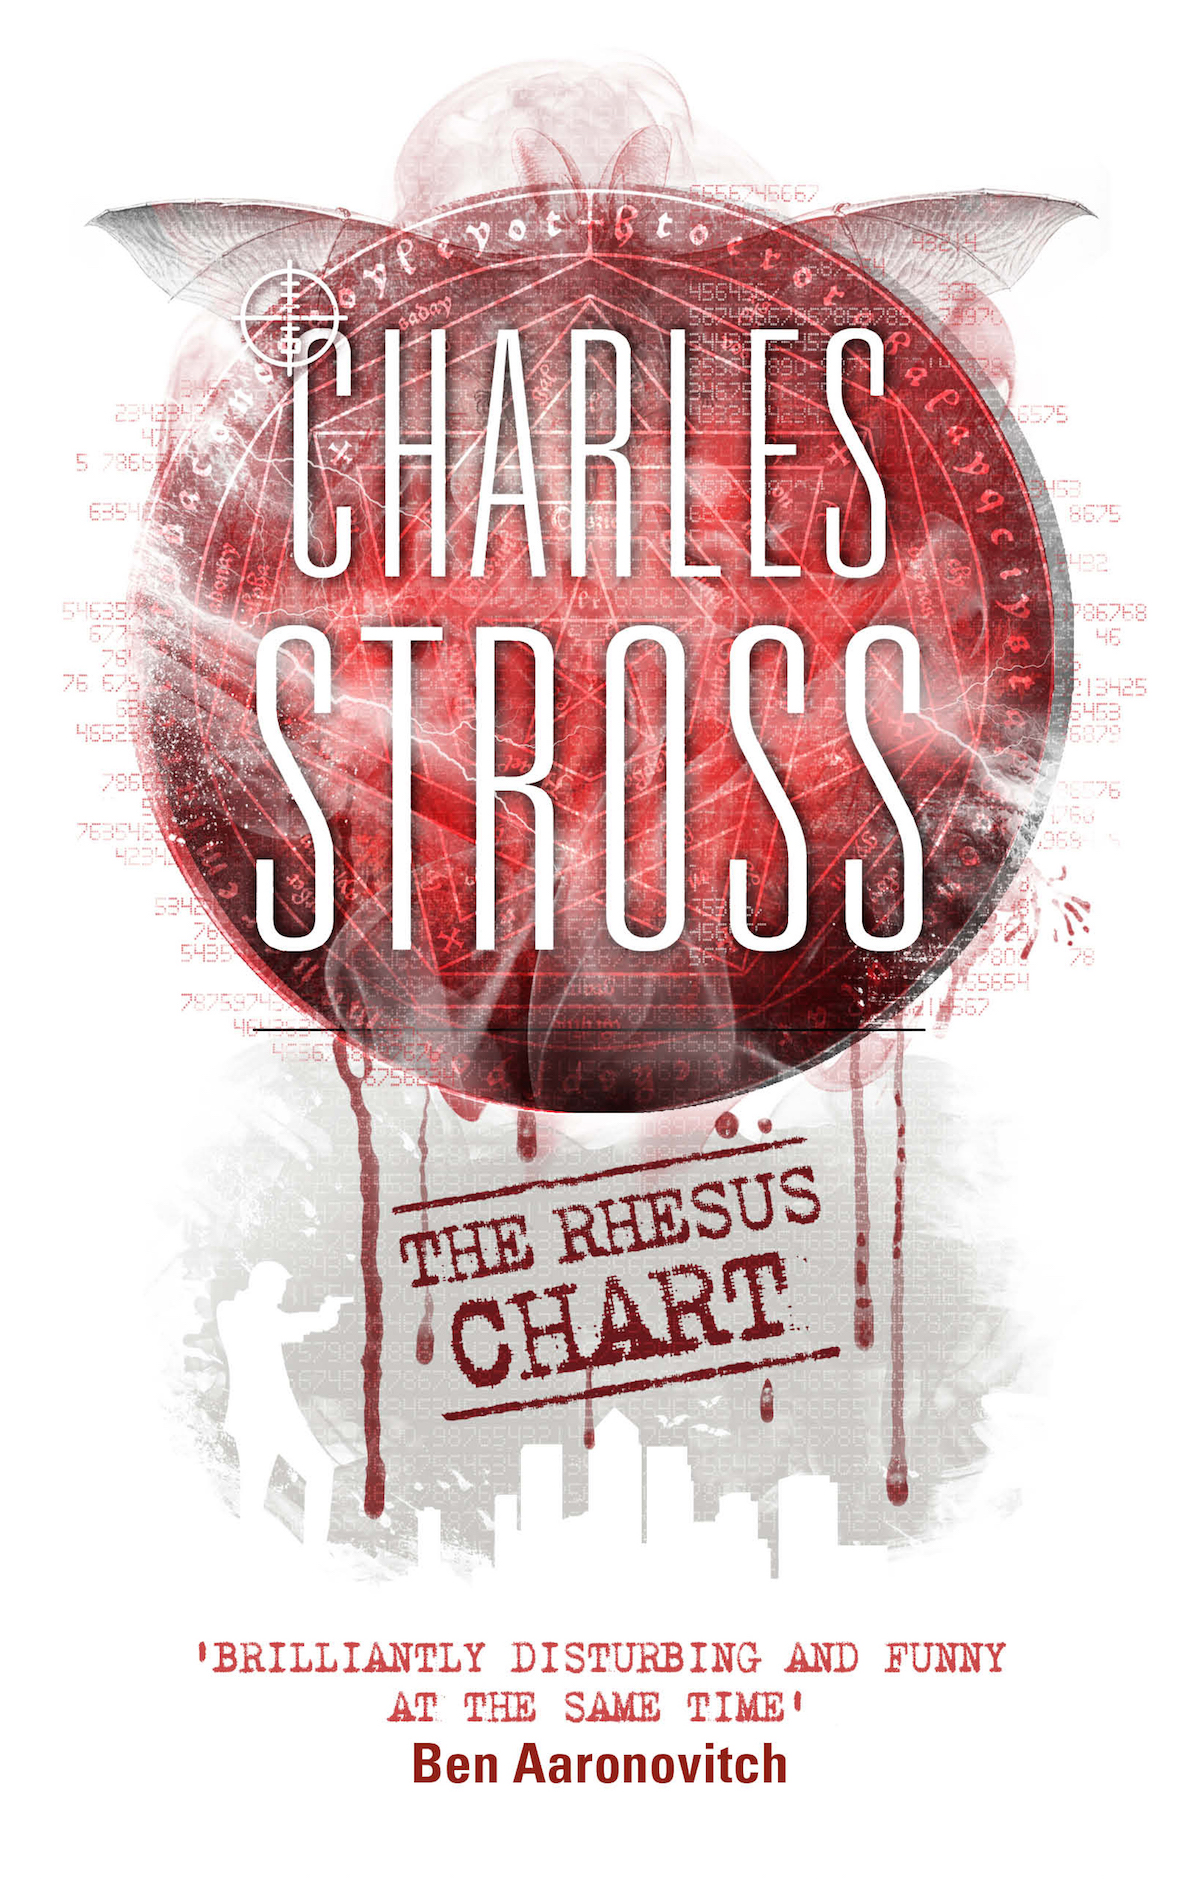 "The Rhesus Chart" de Charles Stross